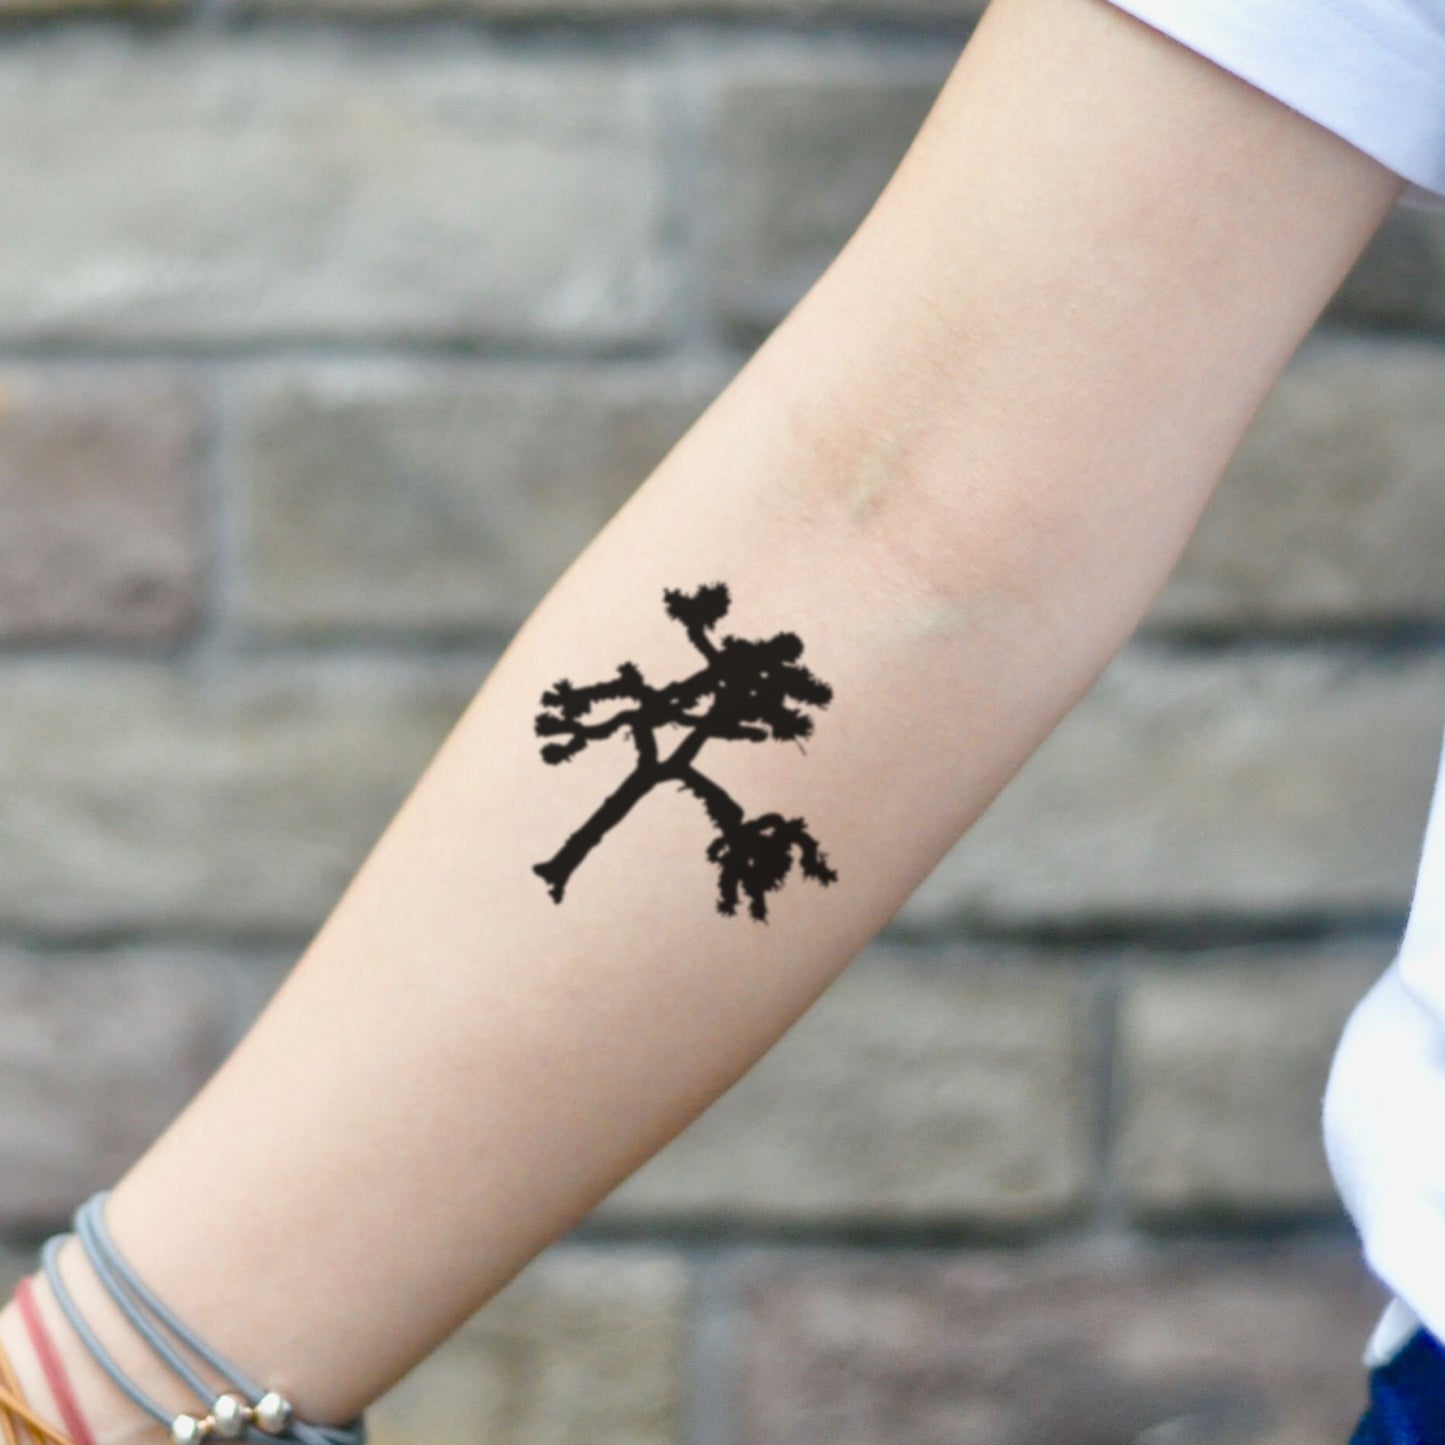 fake small joshua tree nature temporary tattoo sticker design idea on inner arm